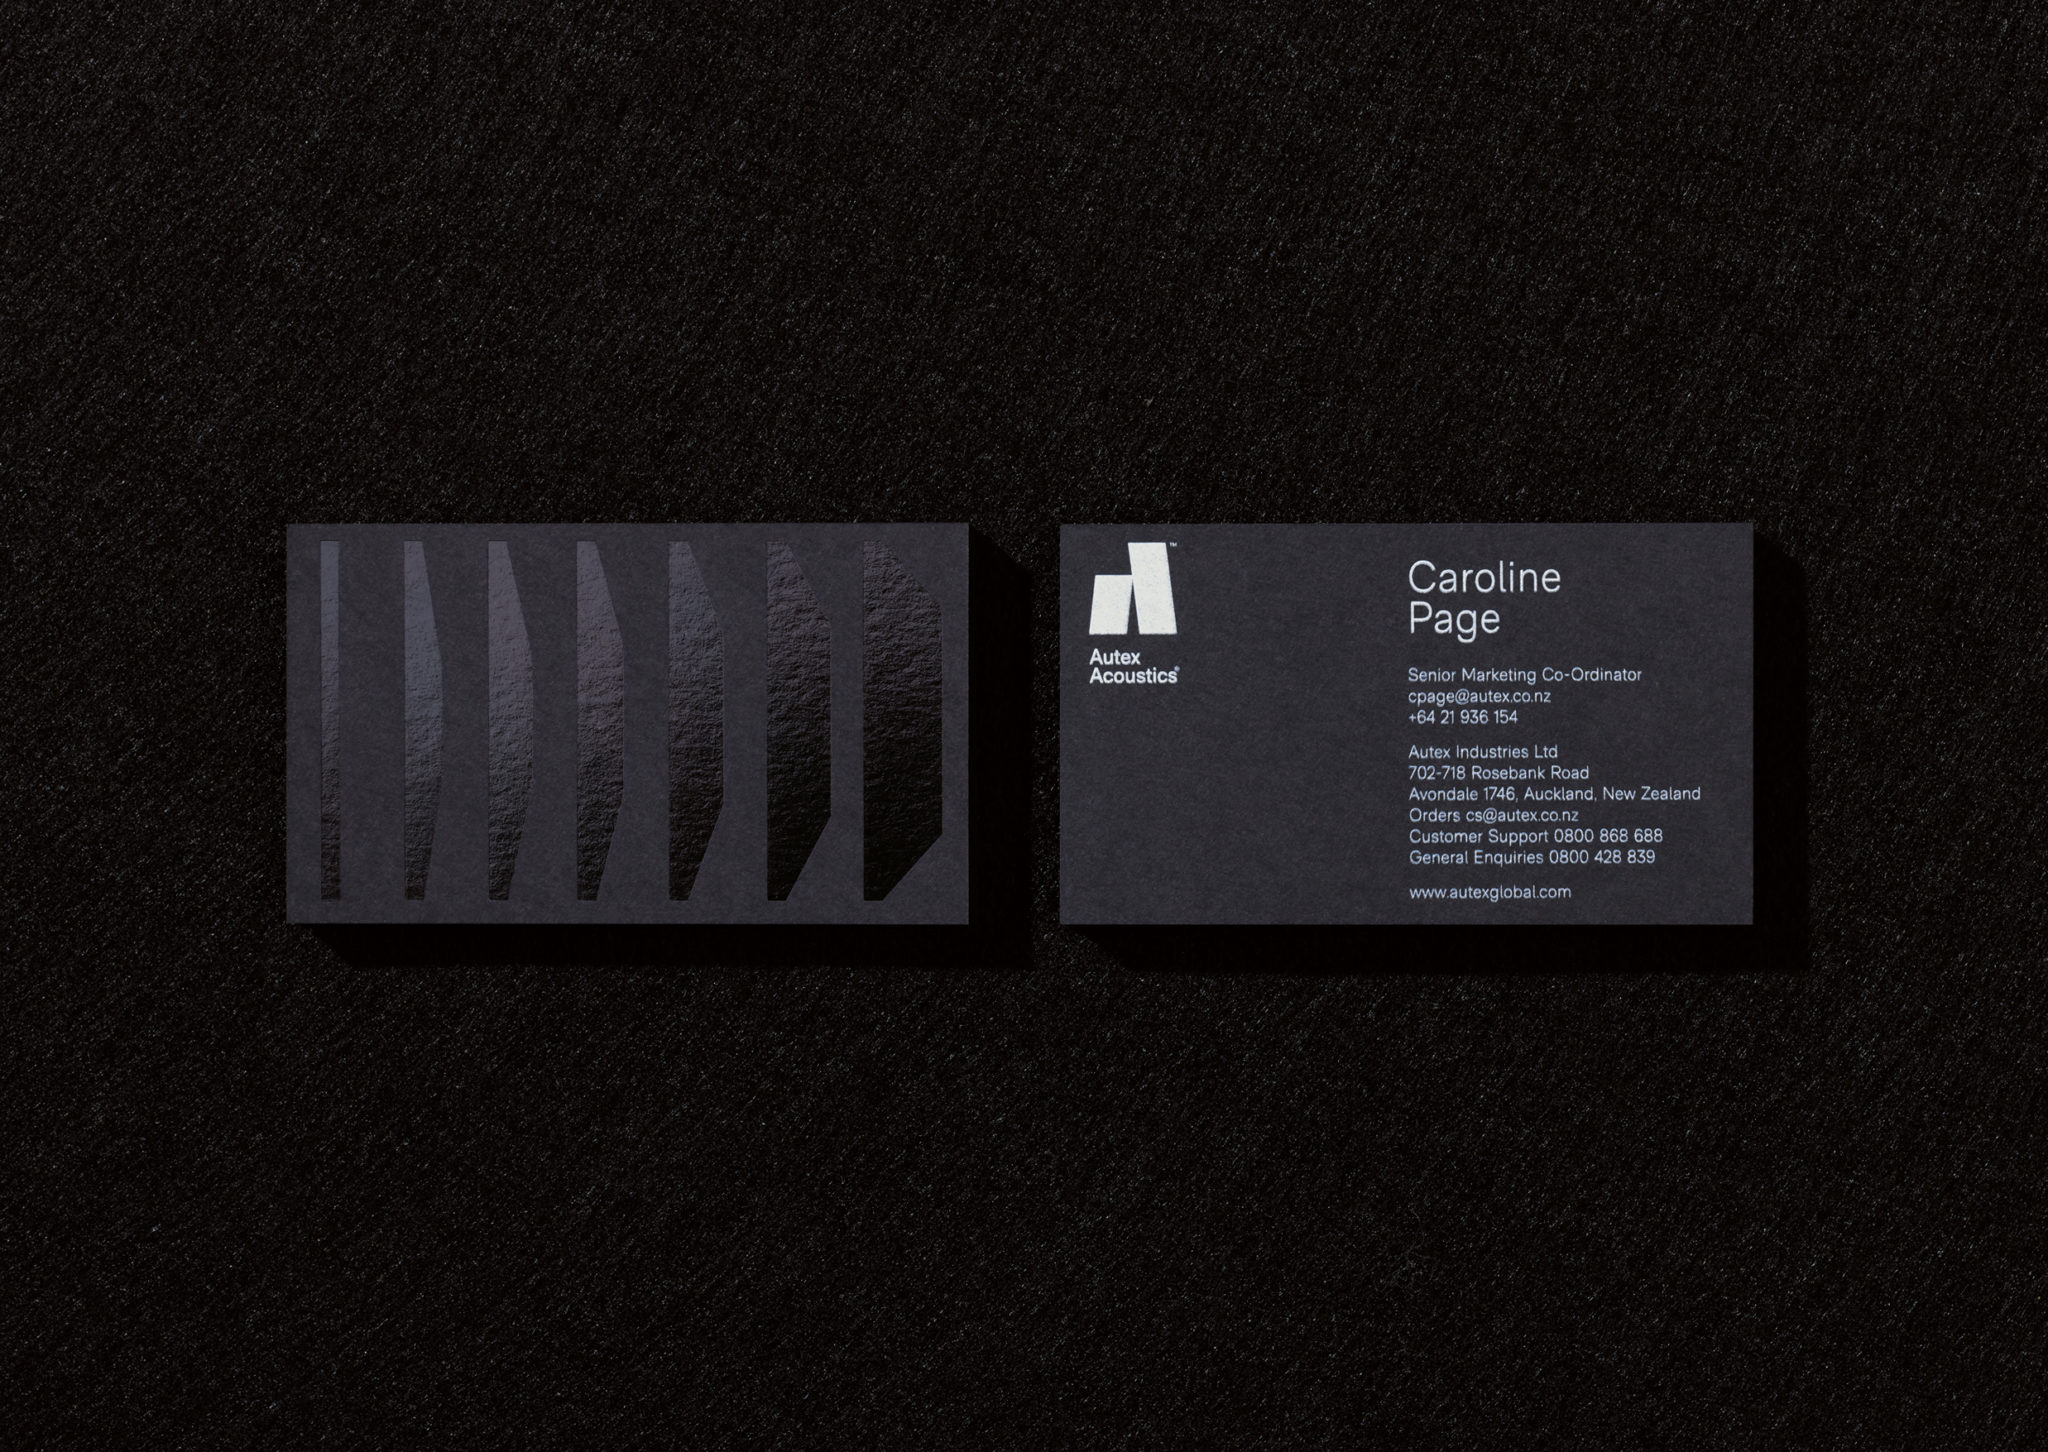 Business card design with black foil for Autex Acoustics by Marx Design, New Zealand